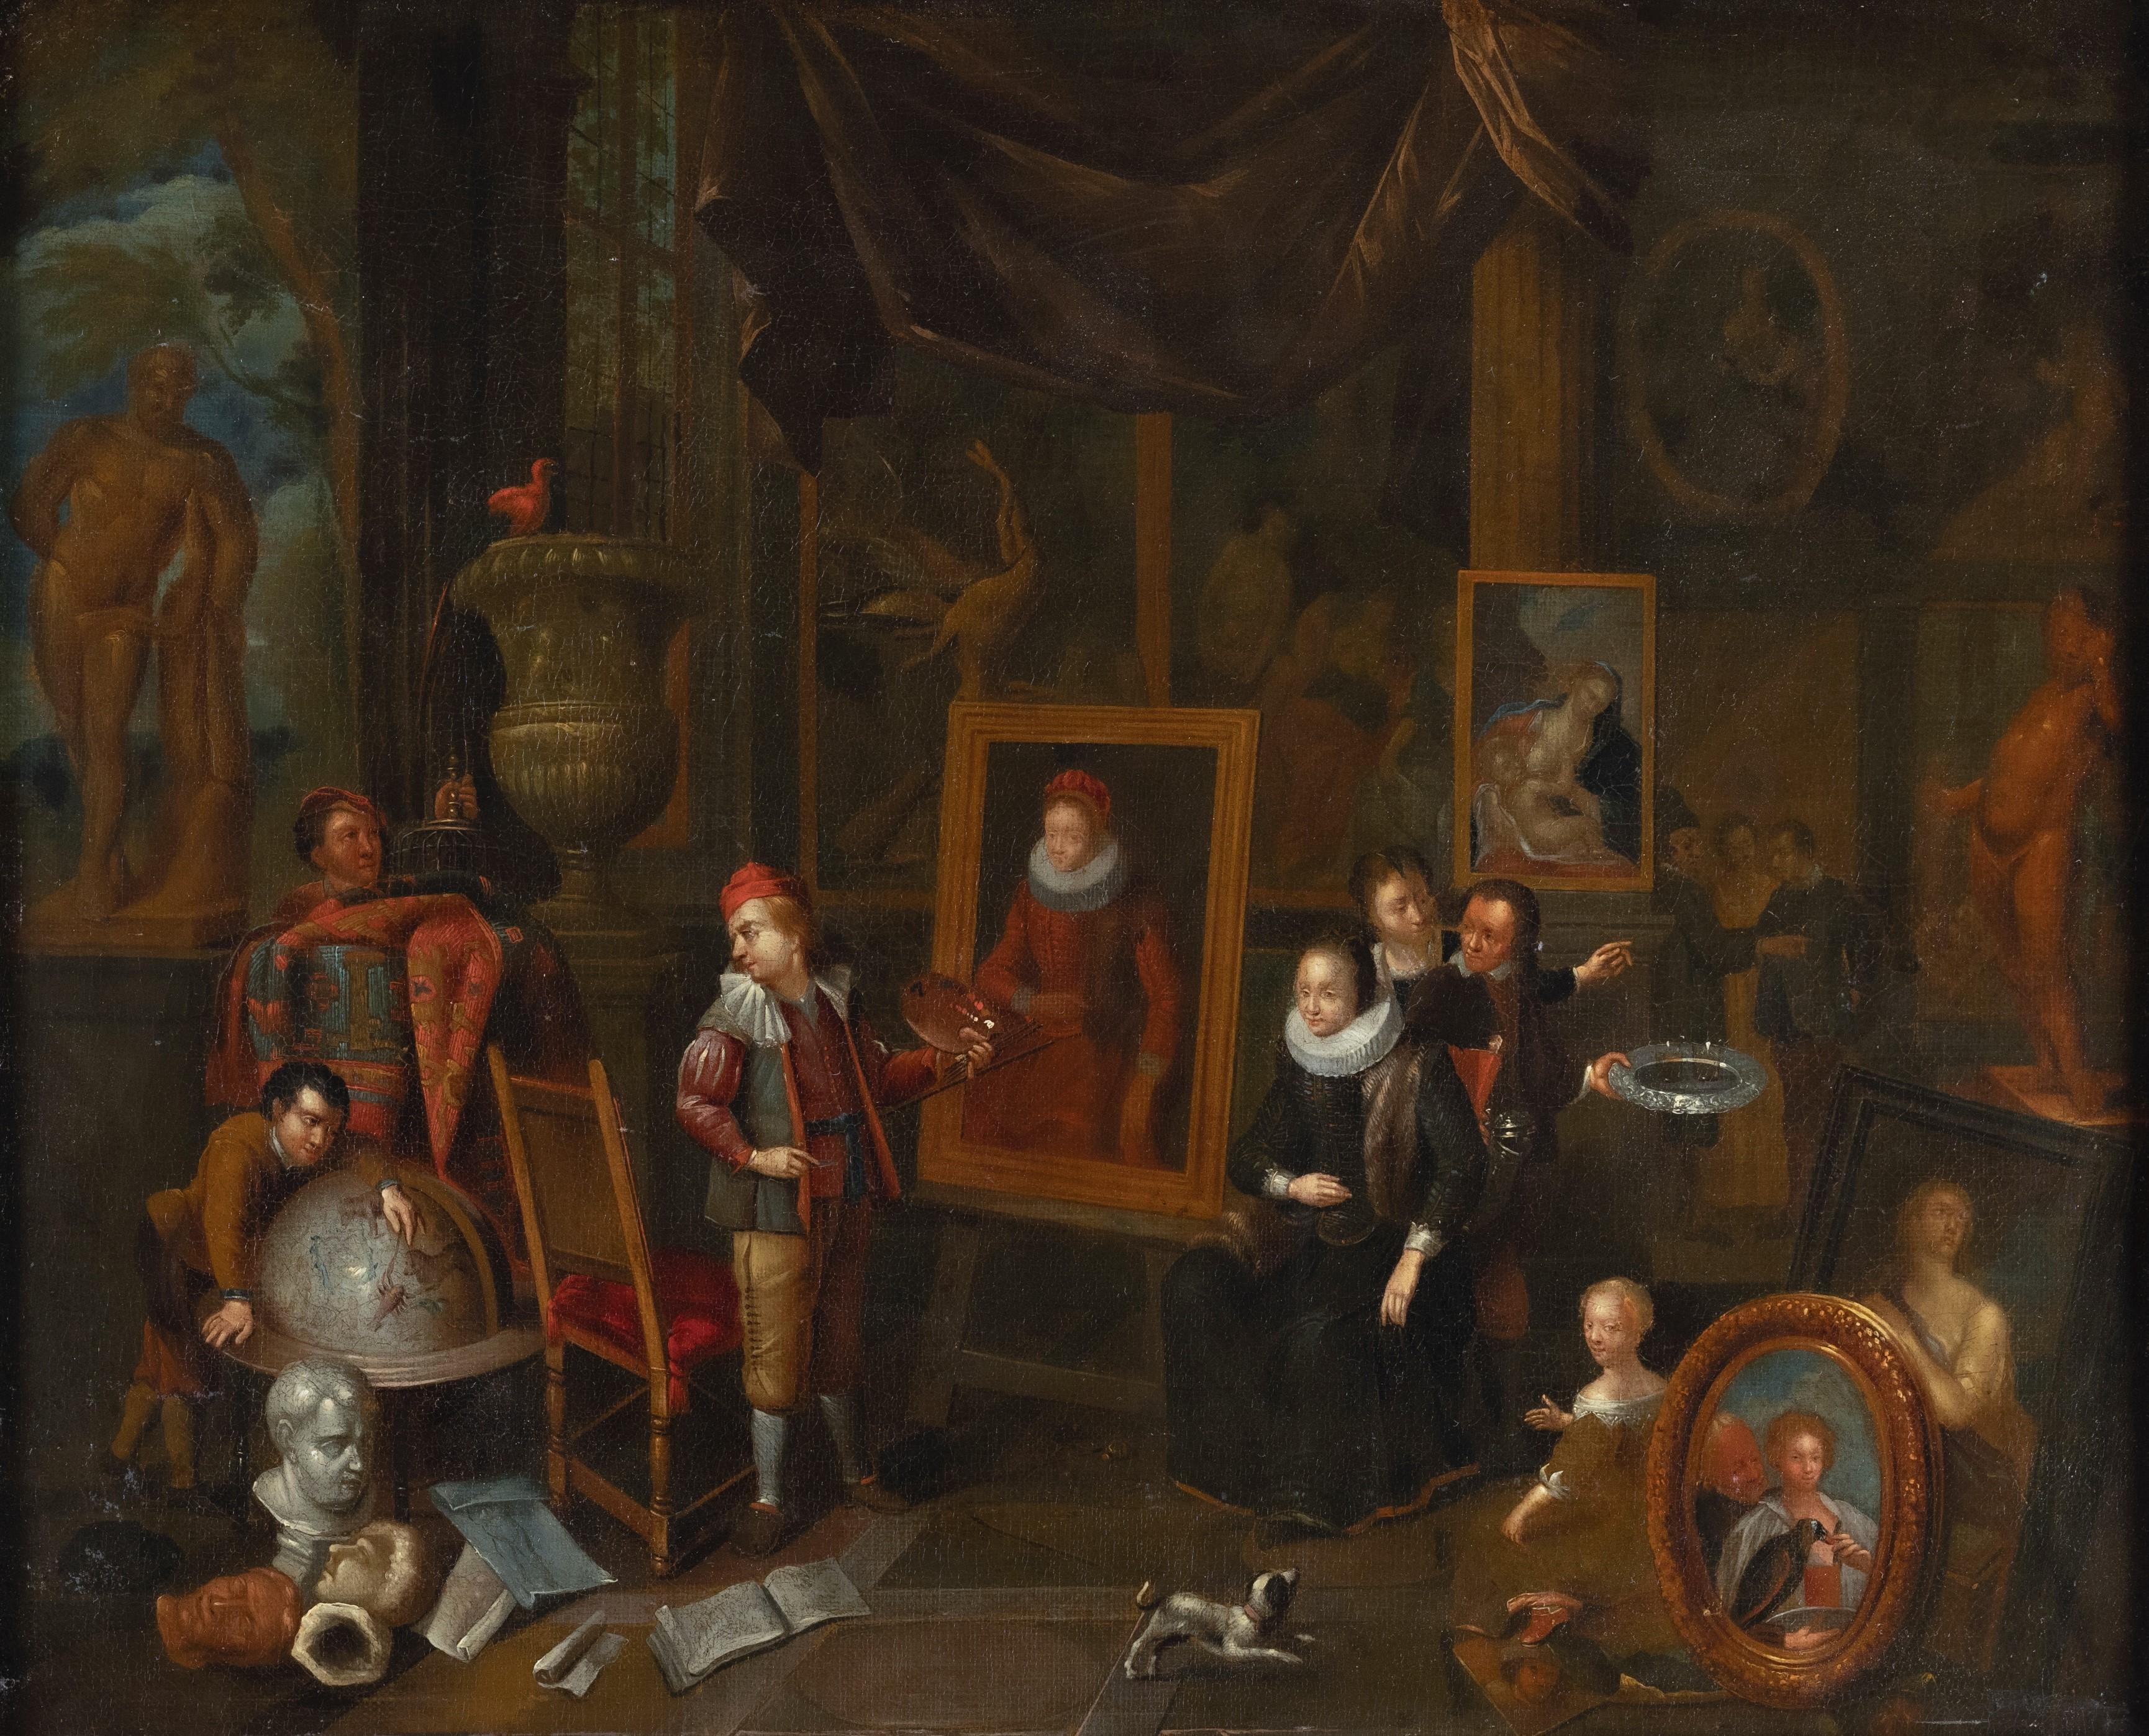  The artist's studio - 17th c. Antwerp school - Painting by Gerard Thomas